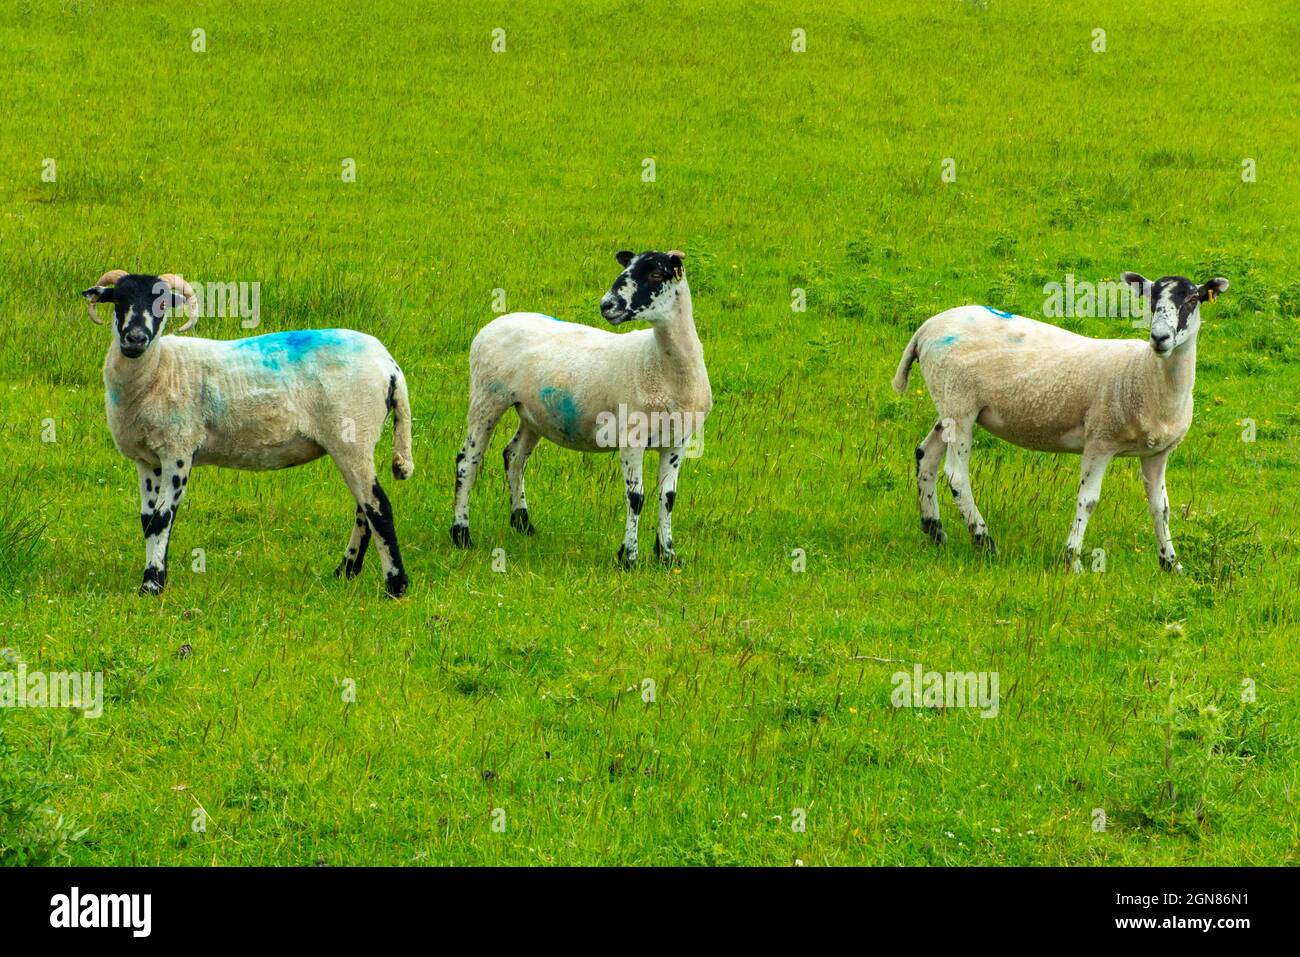 Sheep grazing in fields near Castleton in the Peak District National Park Derbyshire England UK Stock Photo